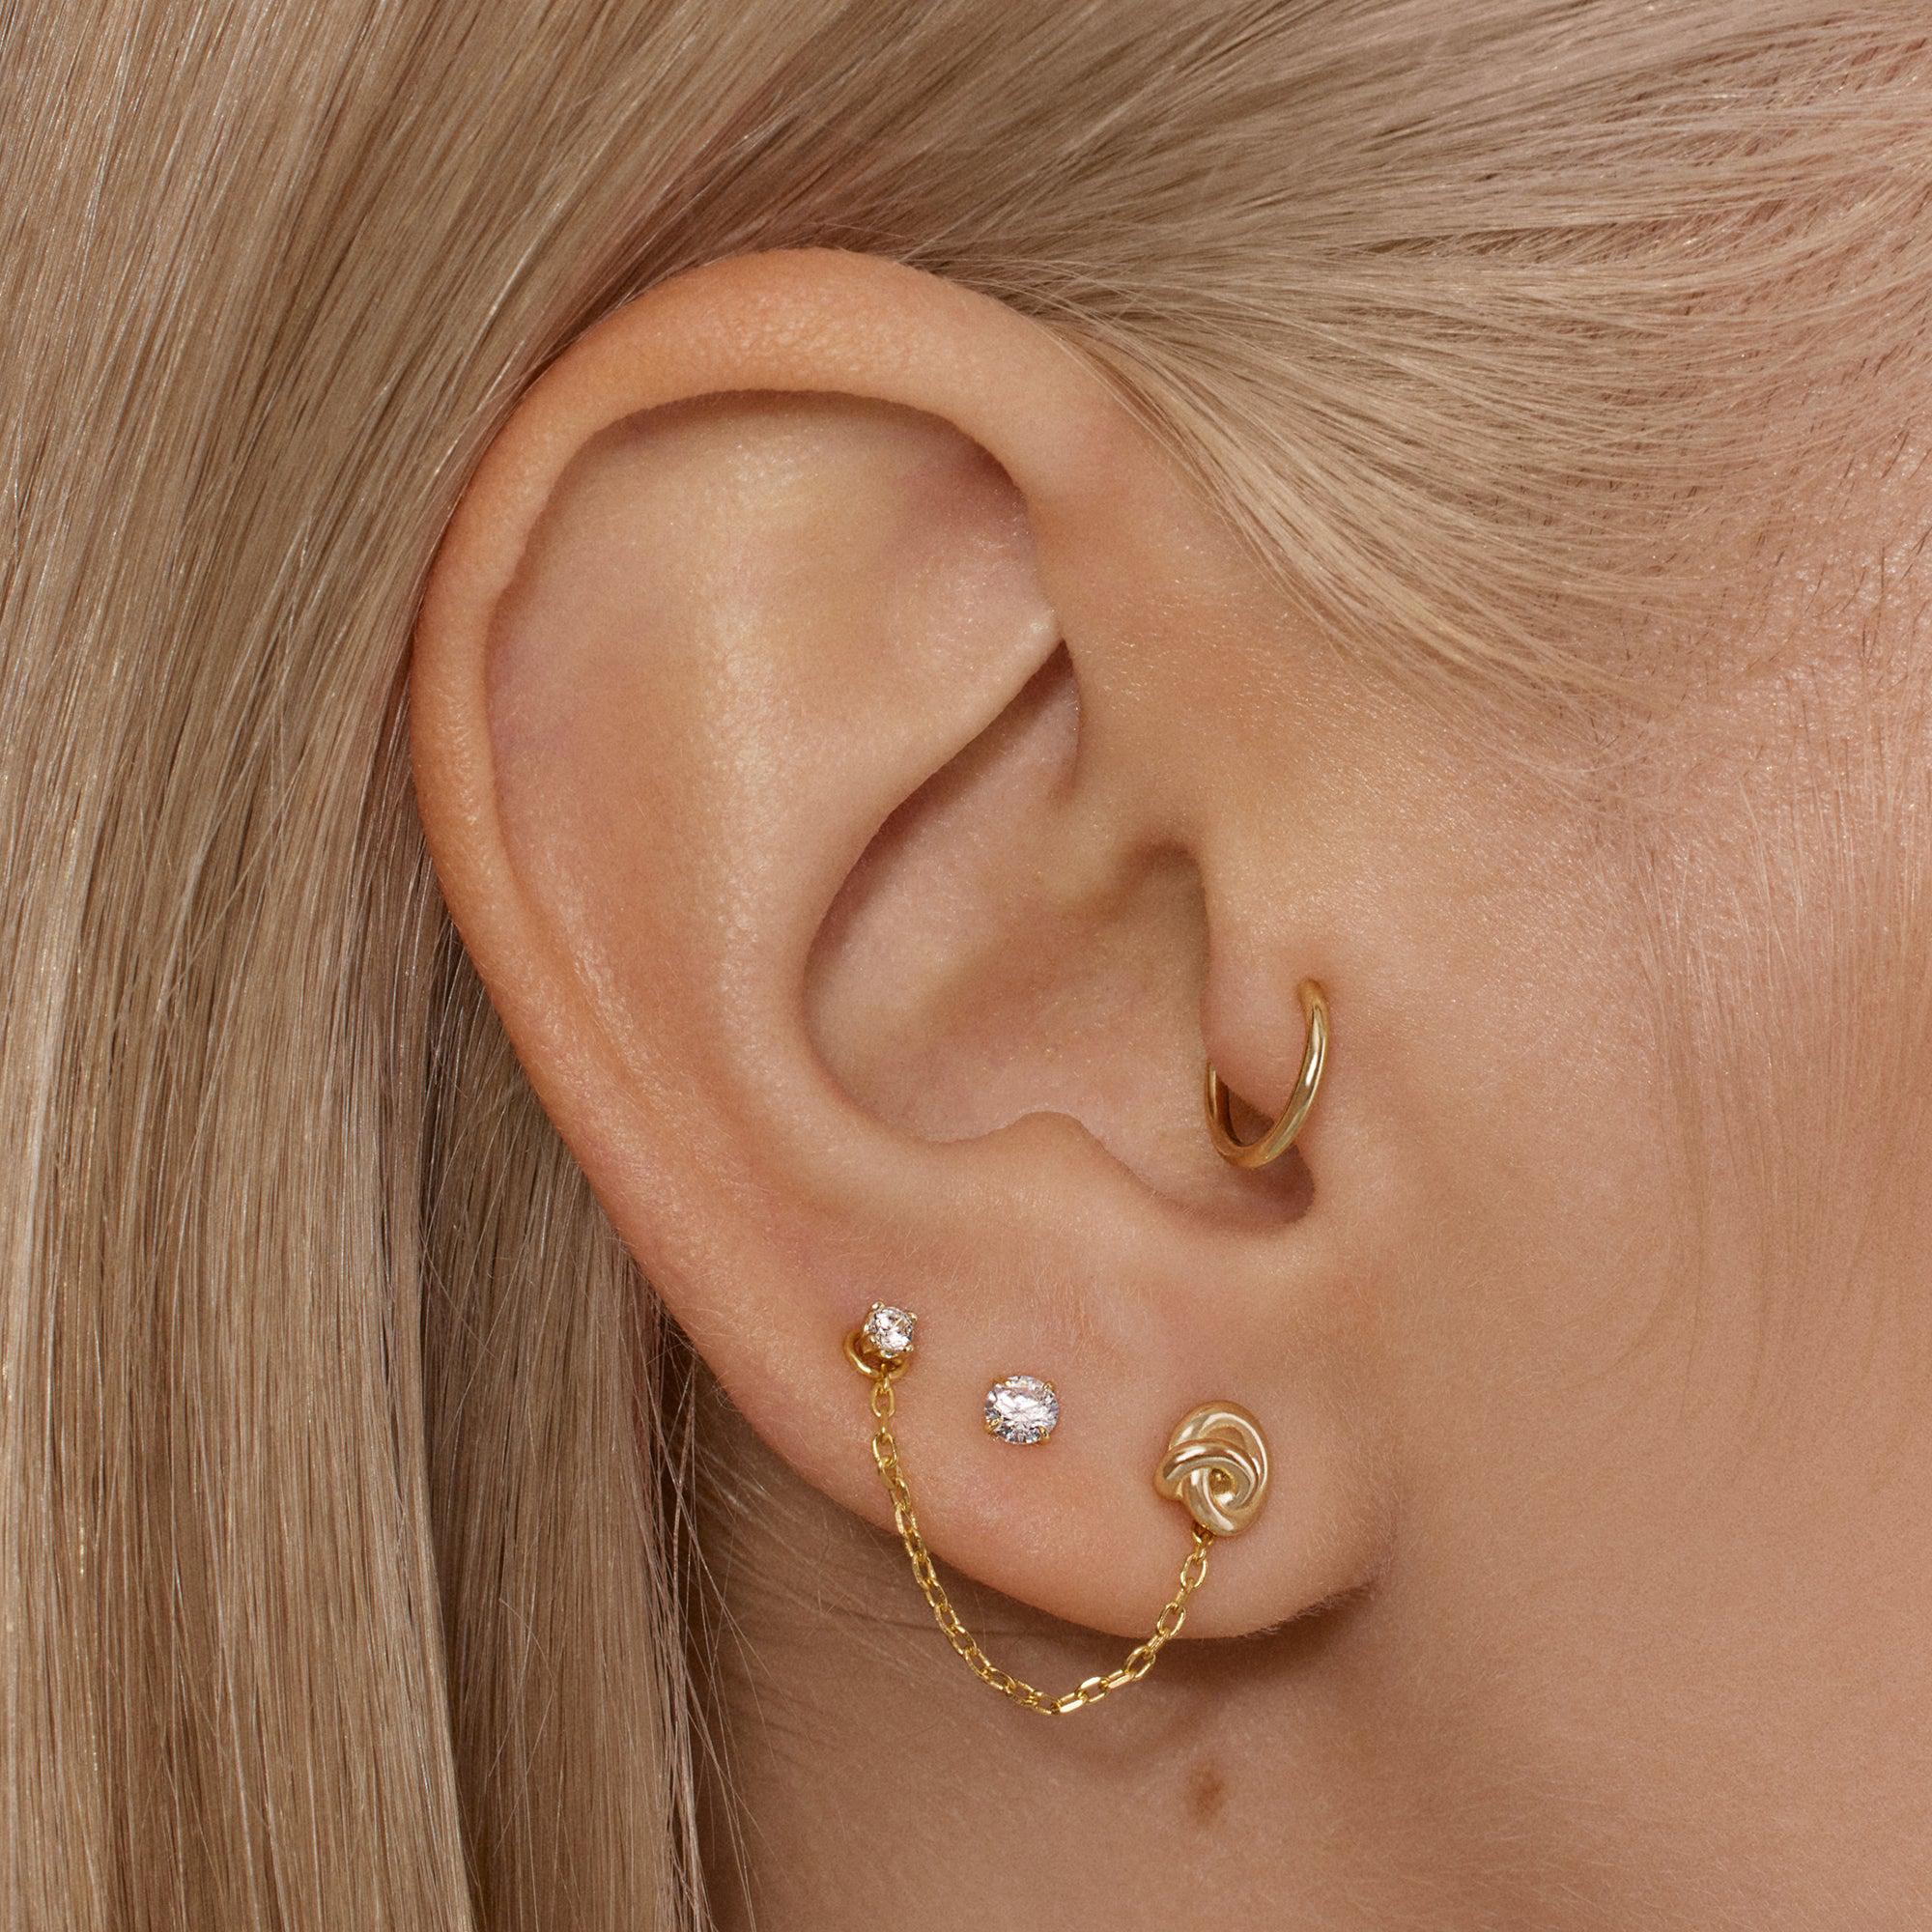 Ear Piercing Studs | Gold Studs & Sterling Silver Studs